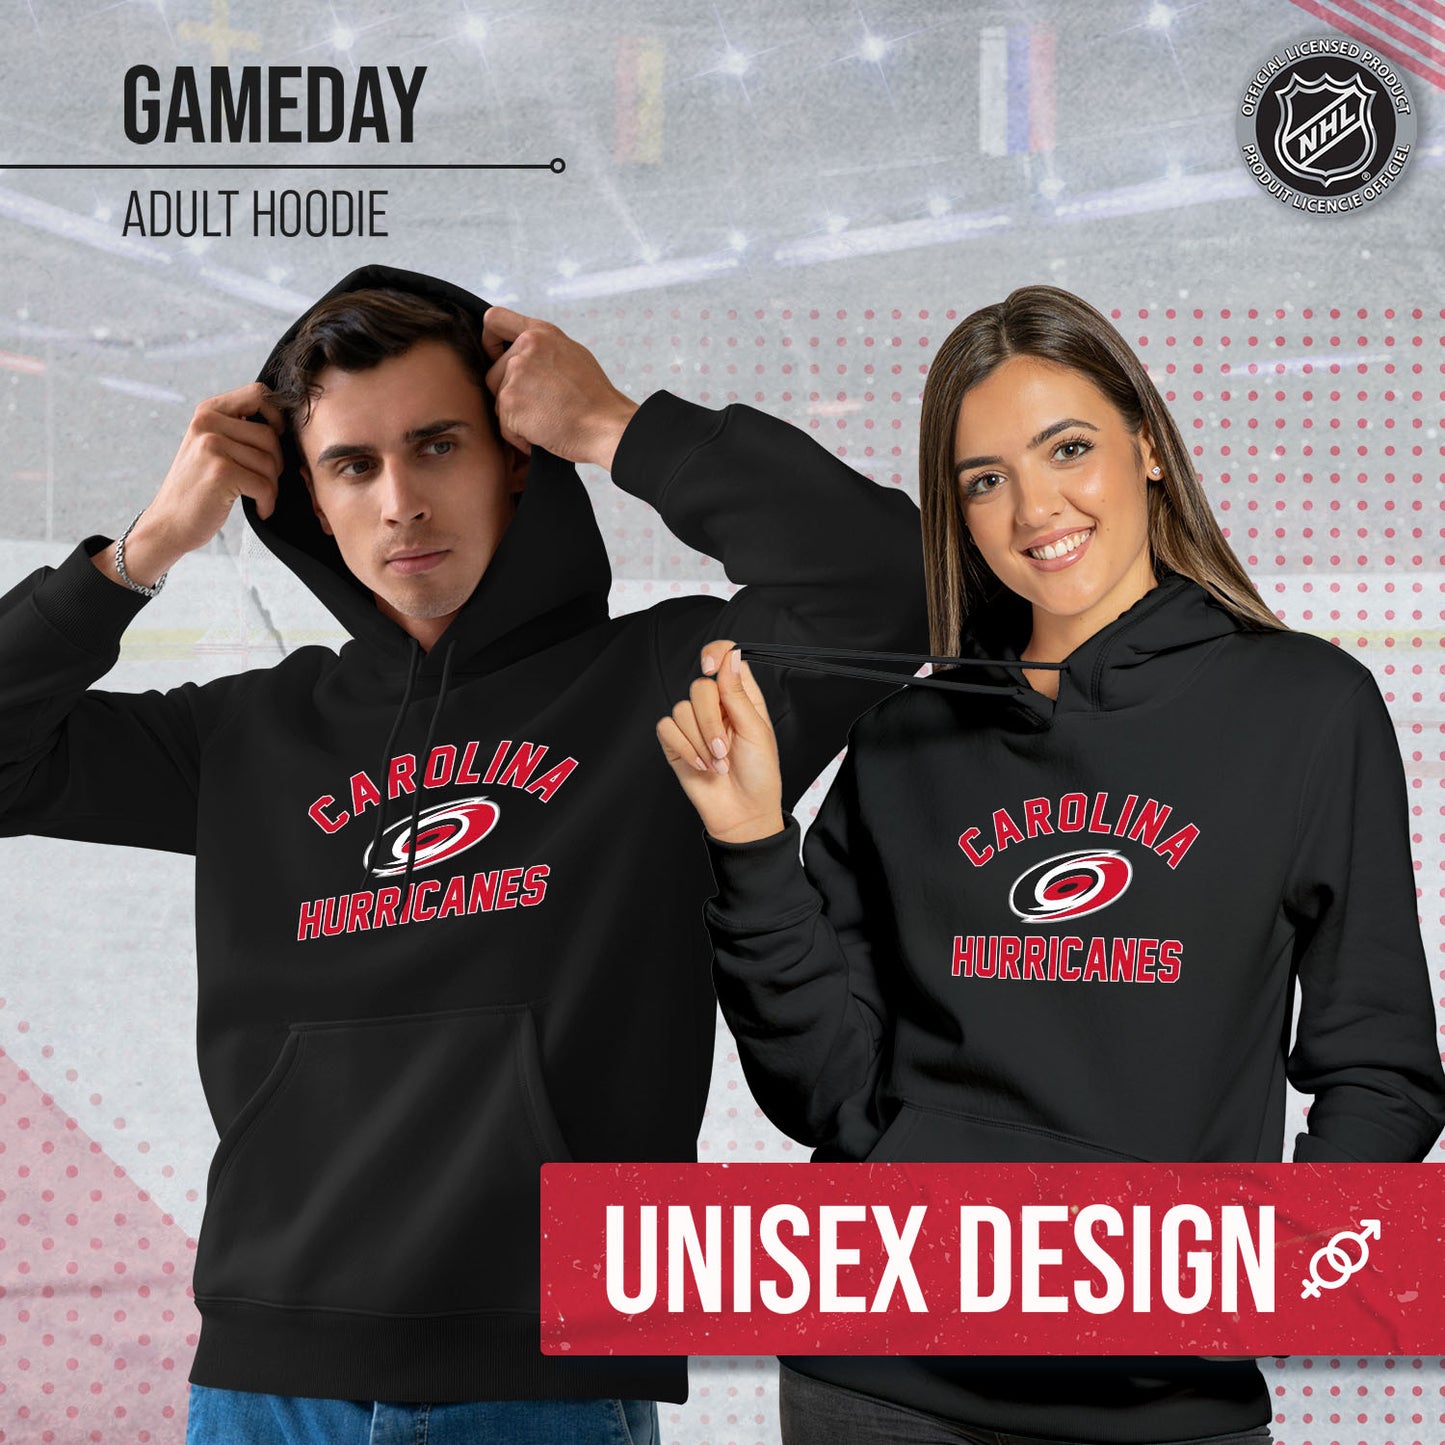 Carolina Hurricanes Adult NHL Gameday Hooded Sweatshirt - Black